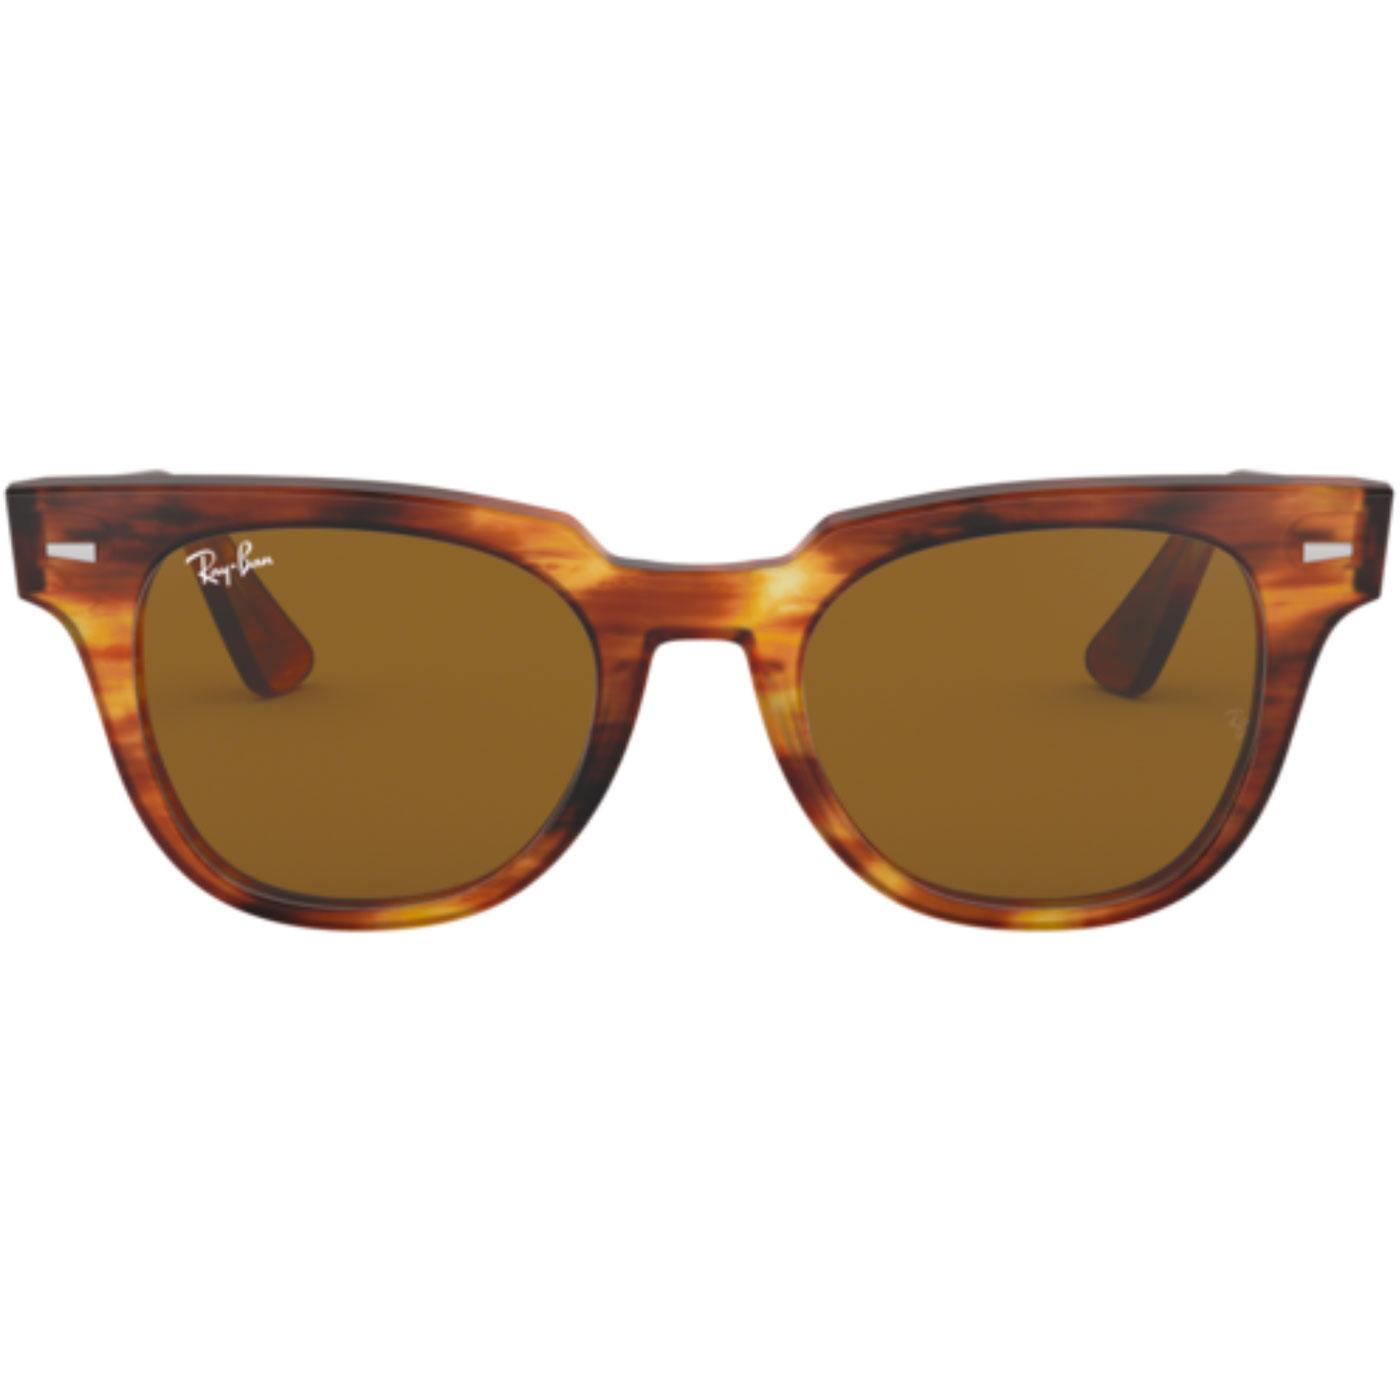 Meteor RAY-BAN Retro Wayfarer Sunglasses in Havana